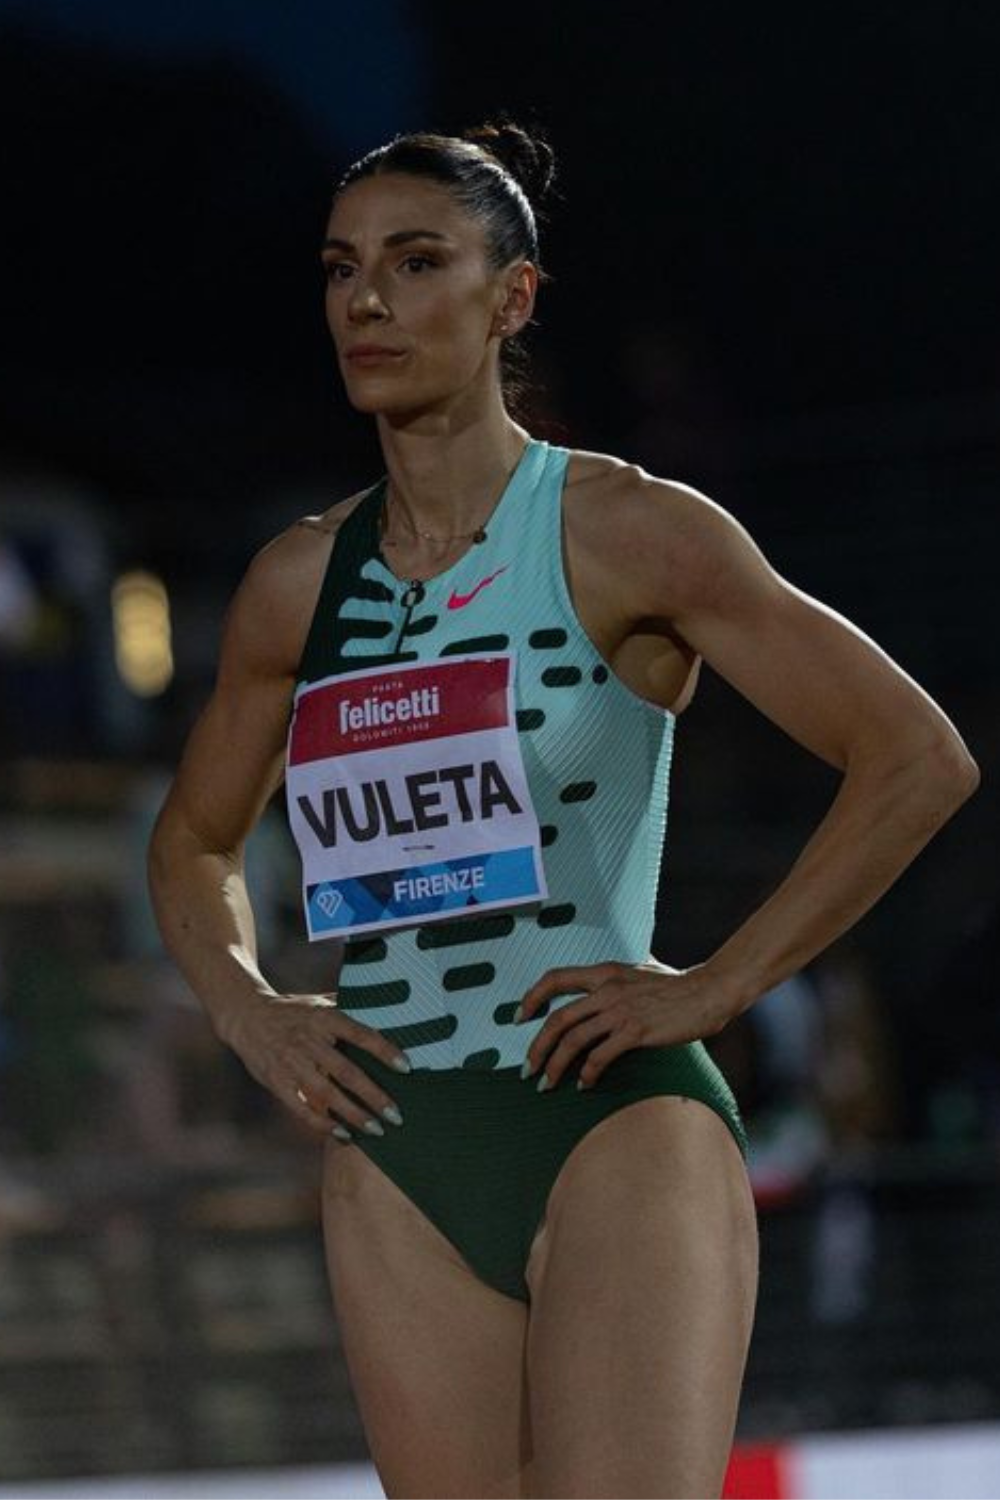 Professional Athlete Ivana Vuleta